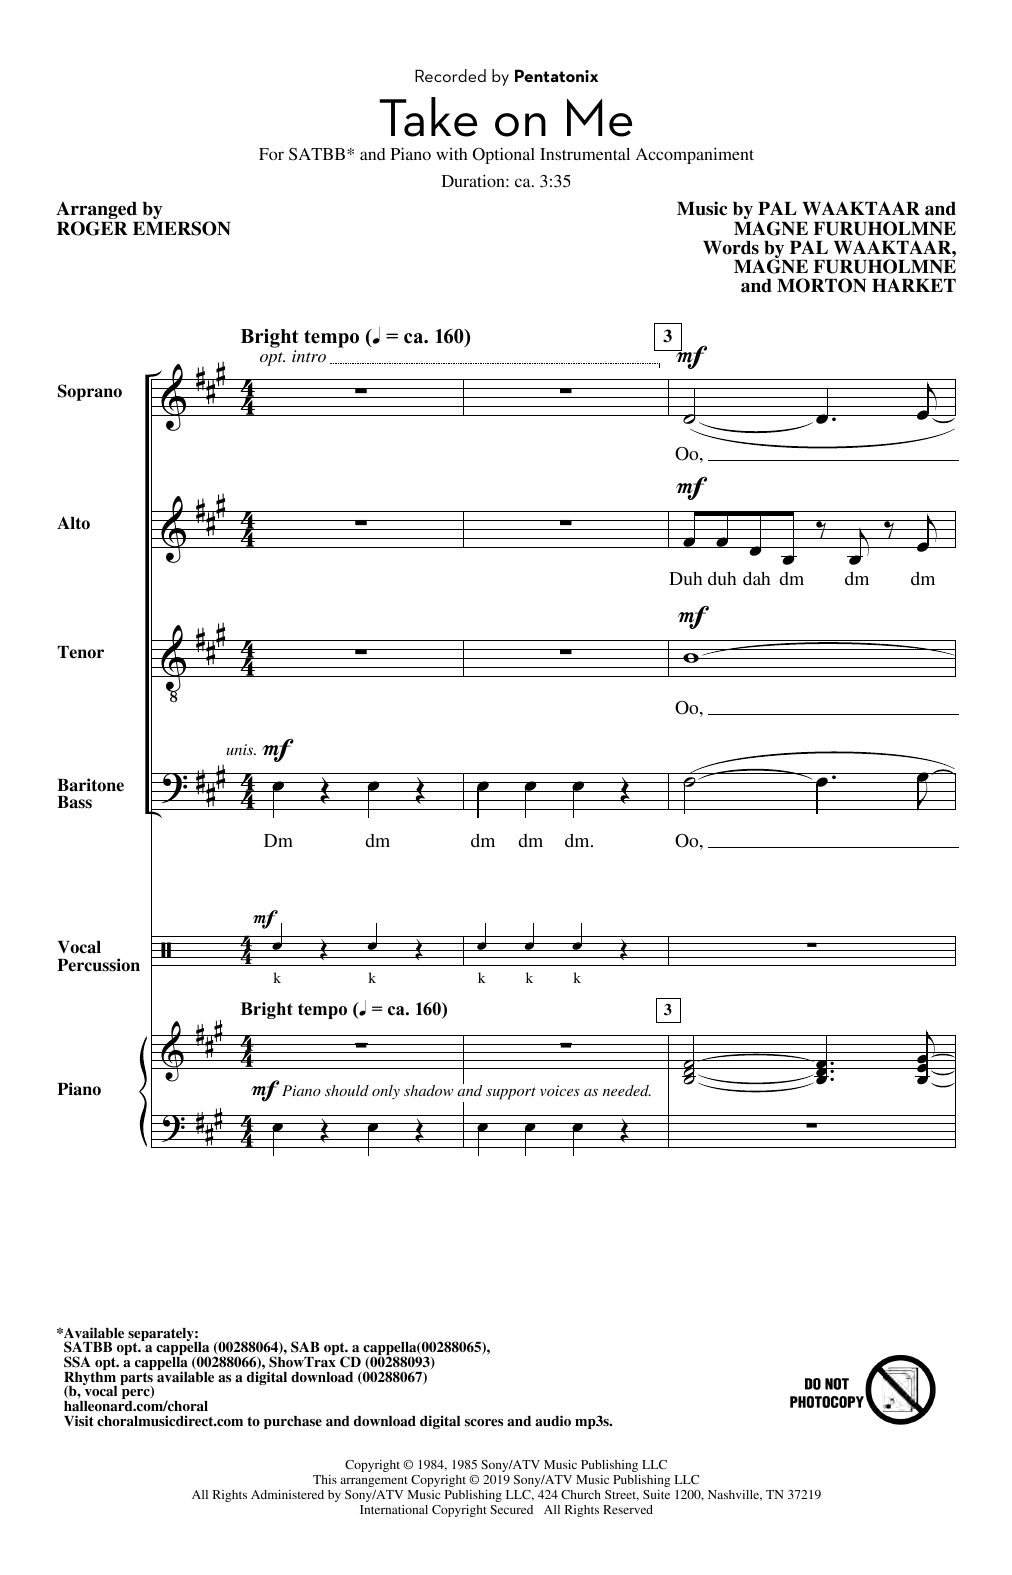 Pentatonix Take On Me (arr. Roger Emerson) Sheet Music Notes & Chords for SAB Choir - Download or Print PDF